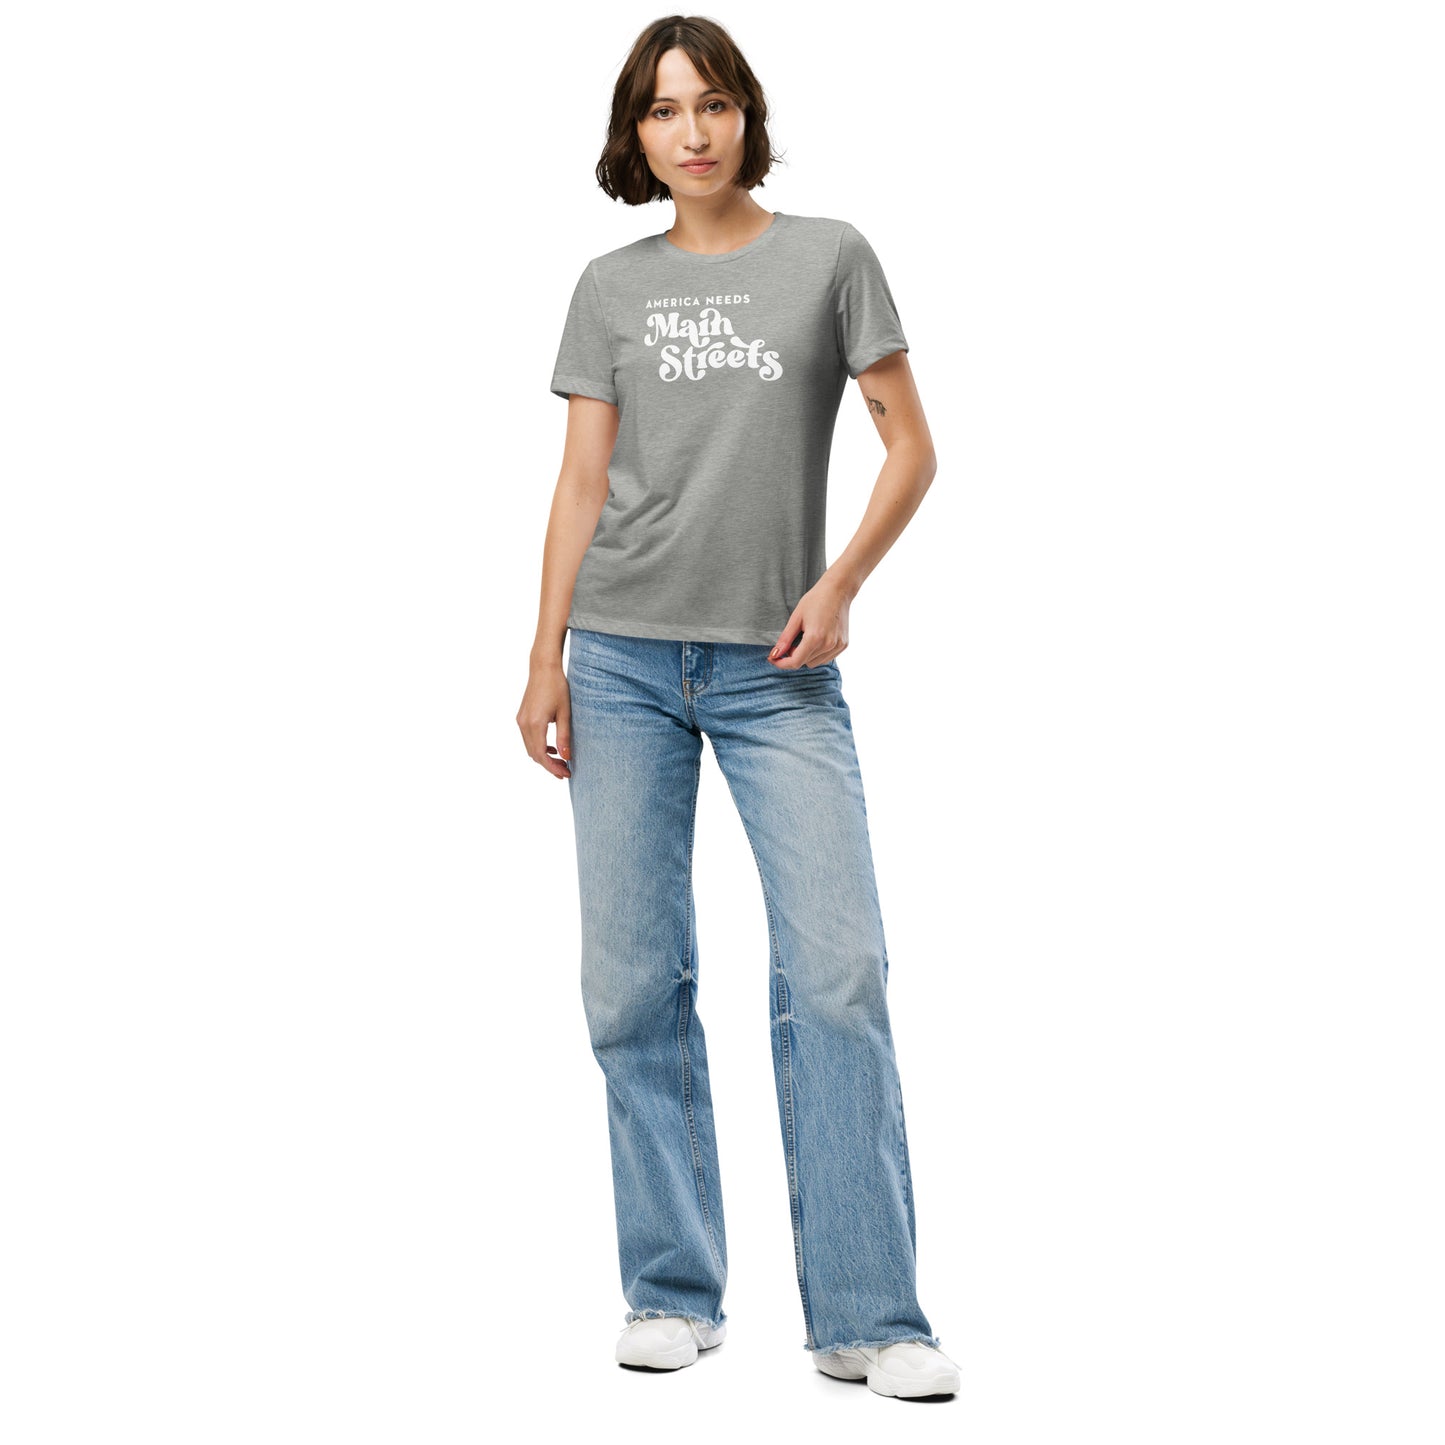 "America Needs Main Streets" Women’s Relaxed Tri-blend T-shirt